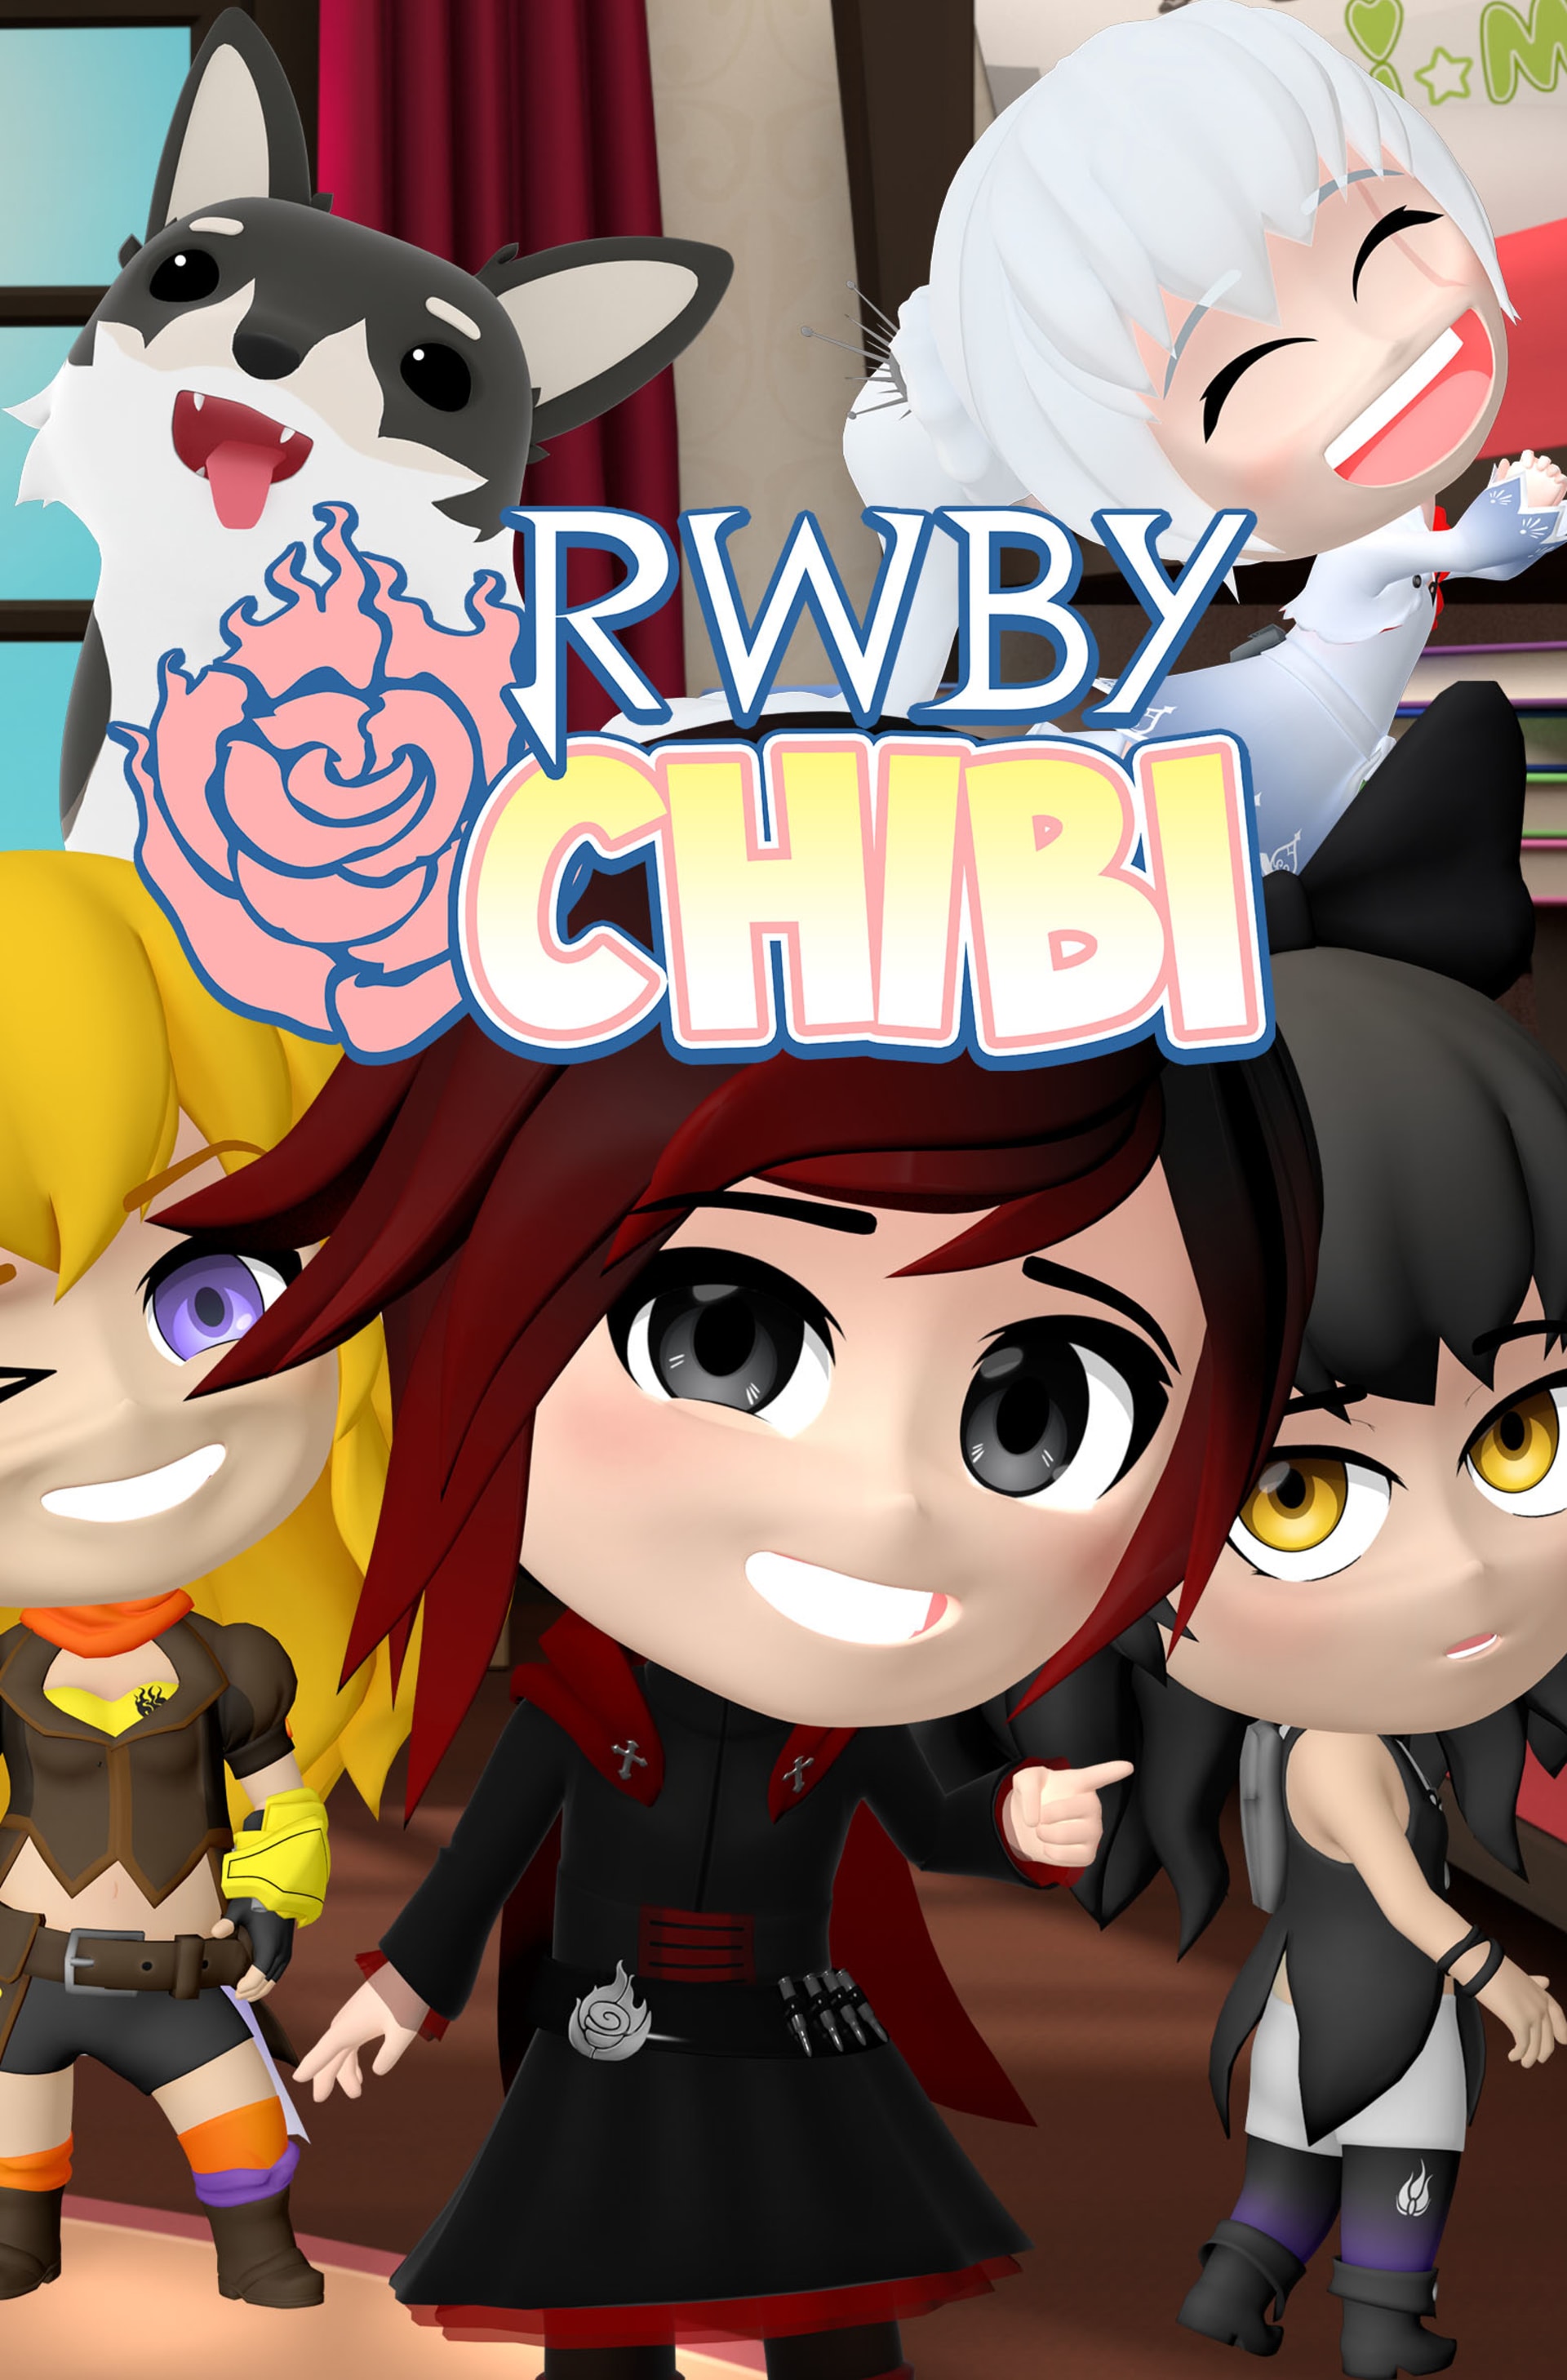 Series RWBY Chibi.